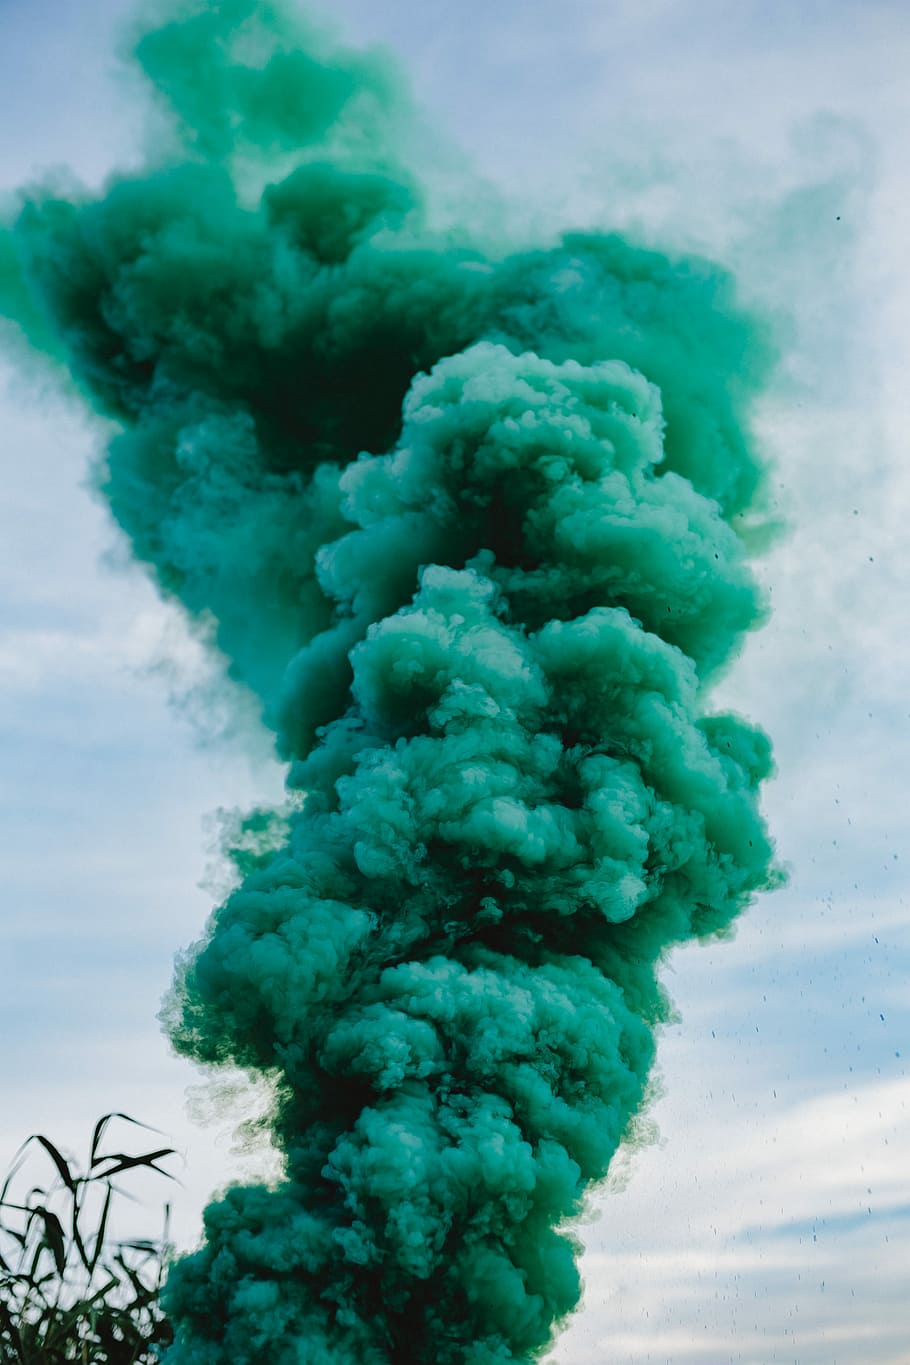 bom asap hijau, bom asap, abstrak, latar belakang, luar, asap hijau, hijau, alam, biru, langit